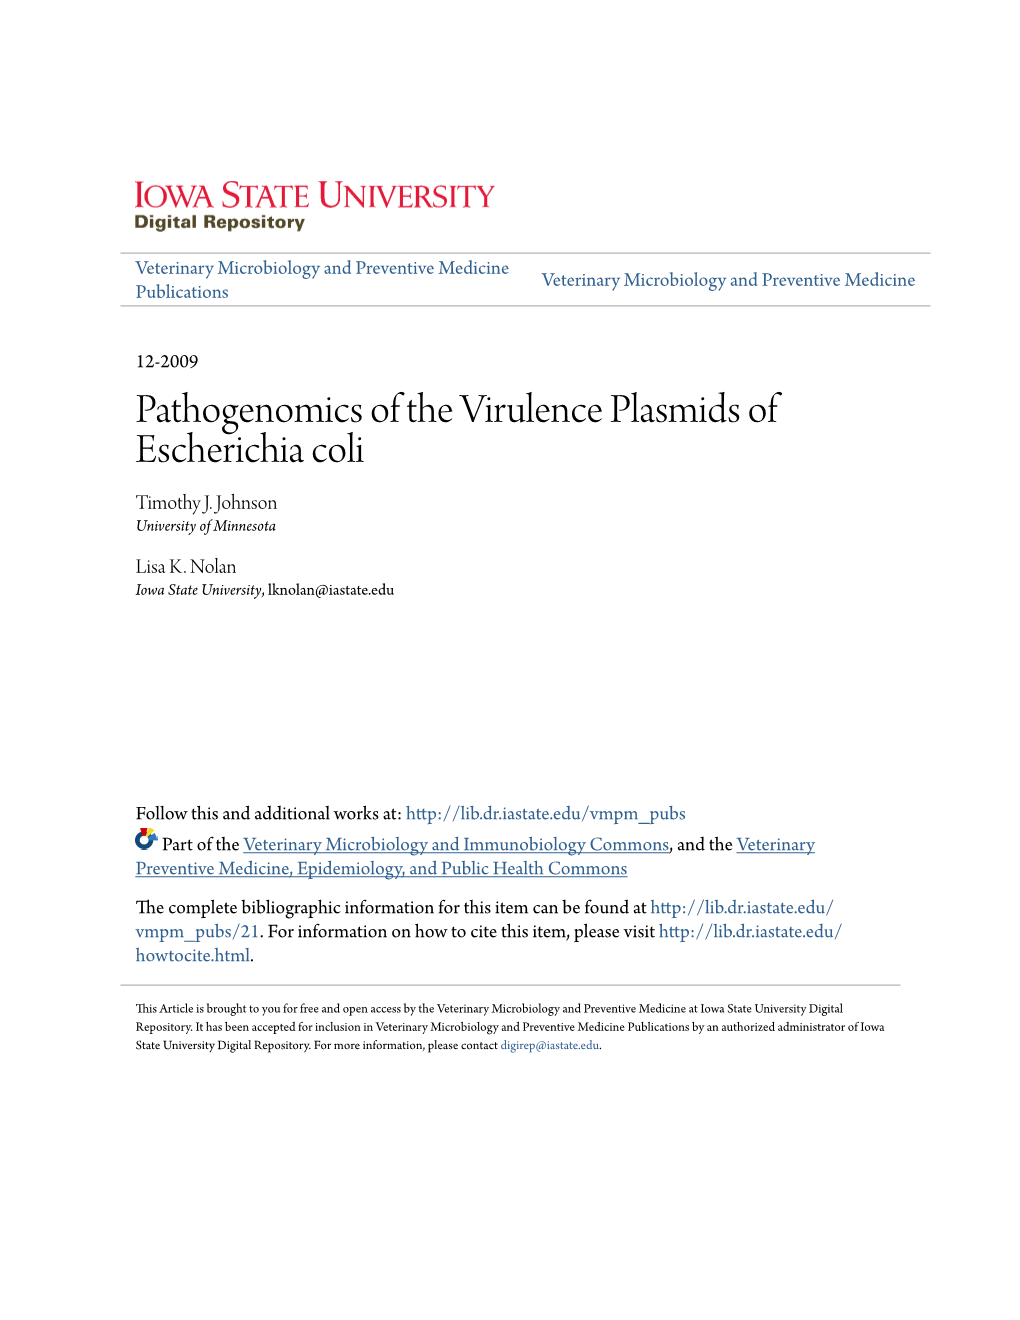 Pathogenomics of the Virulence Plasmids of Escherichia Coli Timothy J